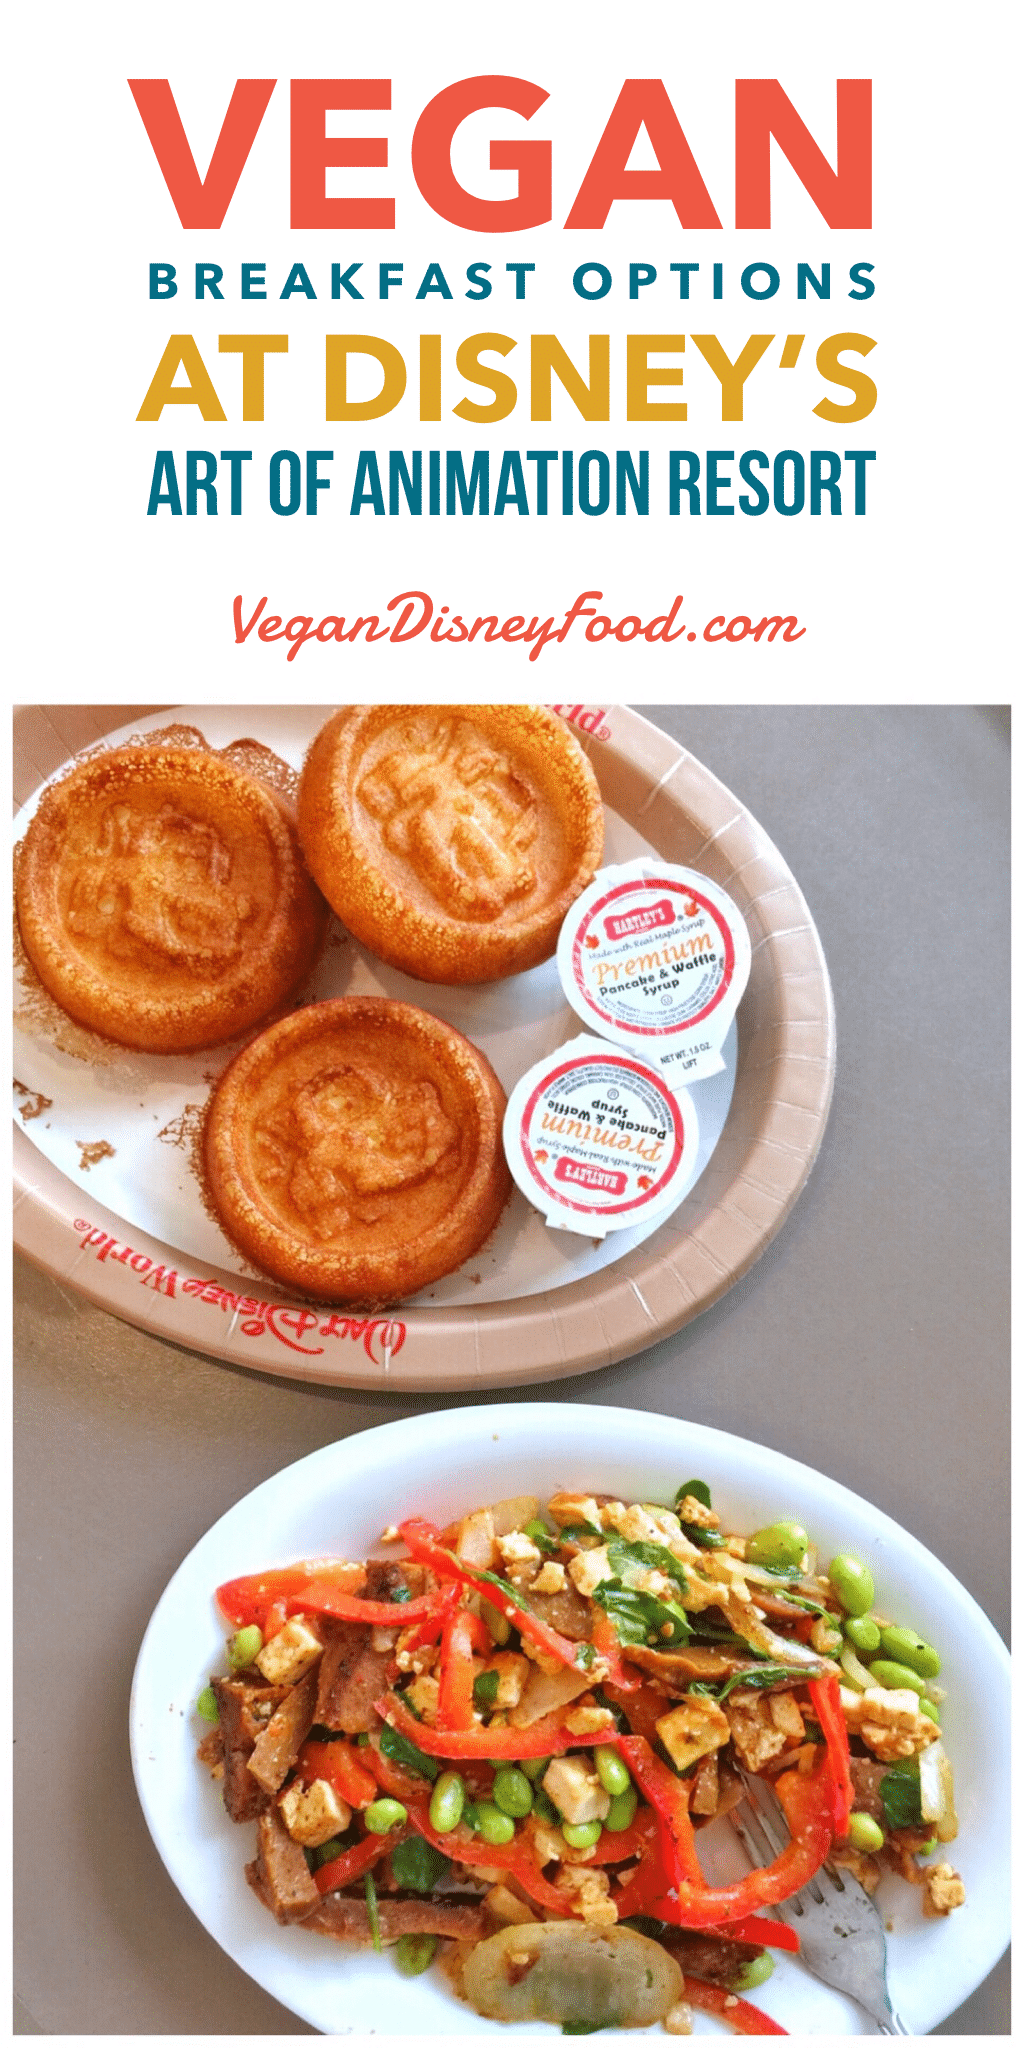 Vegan Breakfast Options at Walt Disney World’s Art of Animation Resort